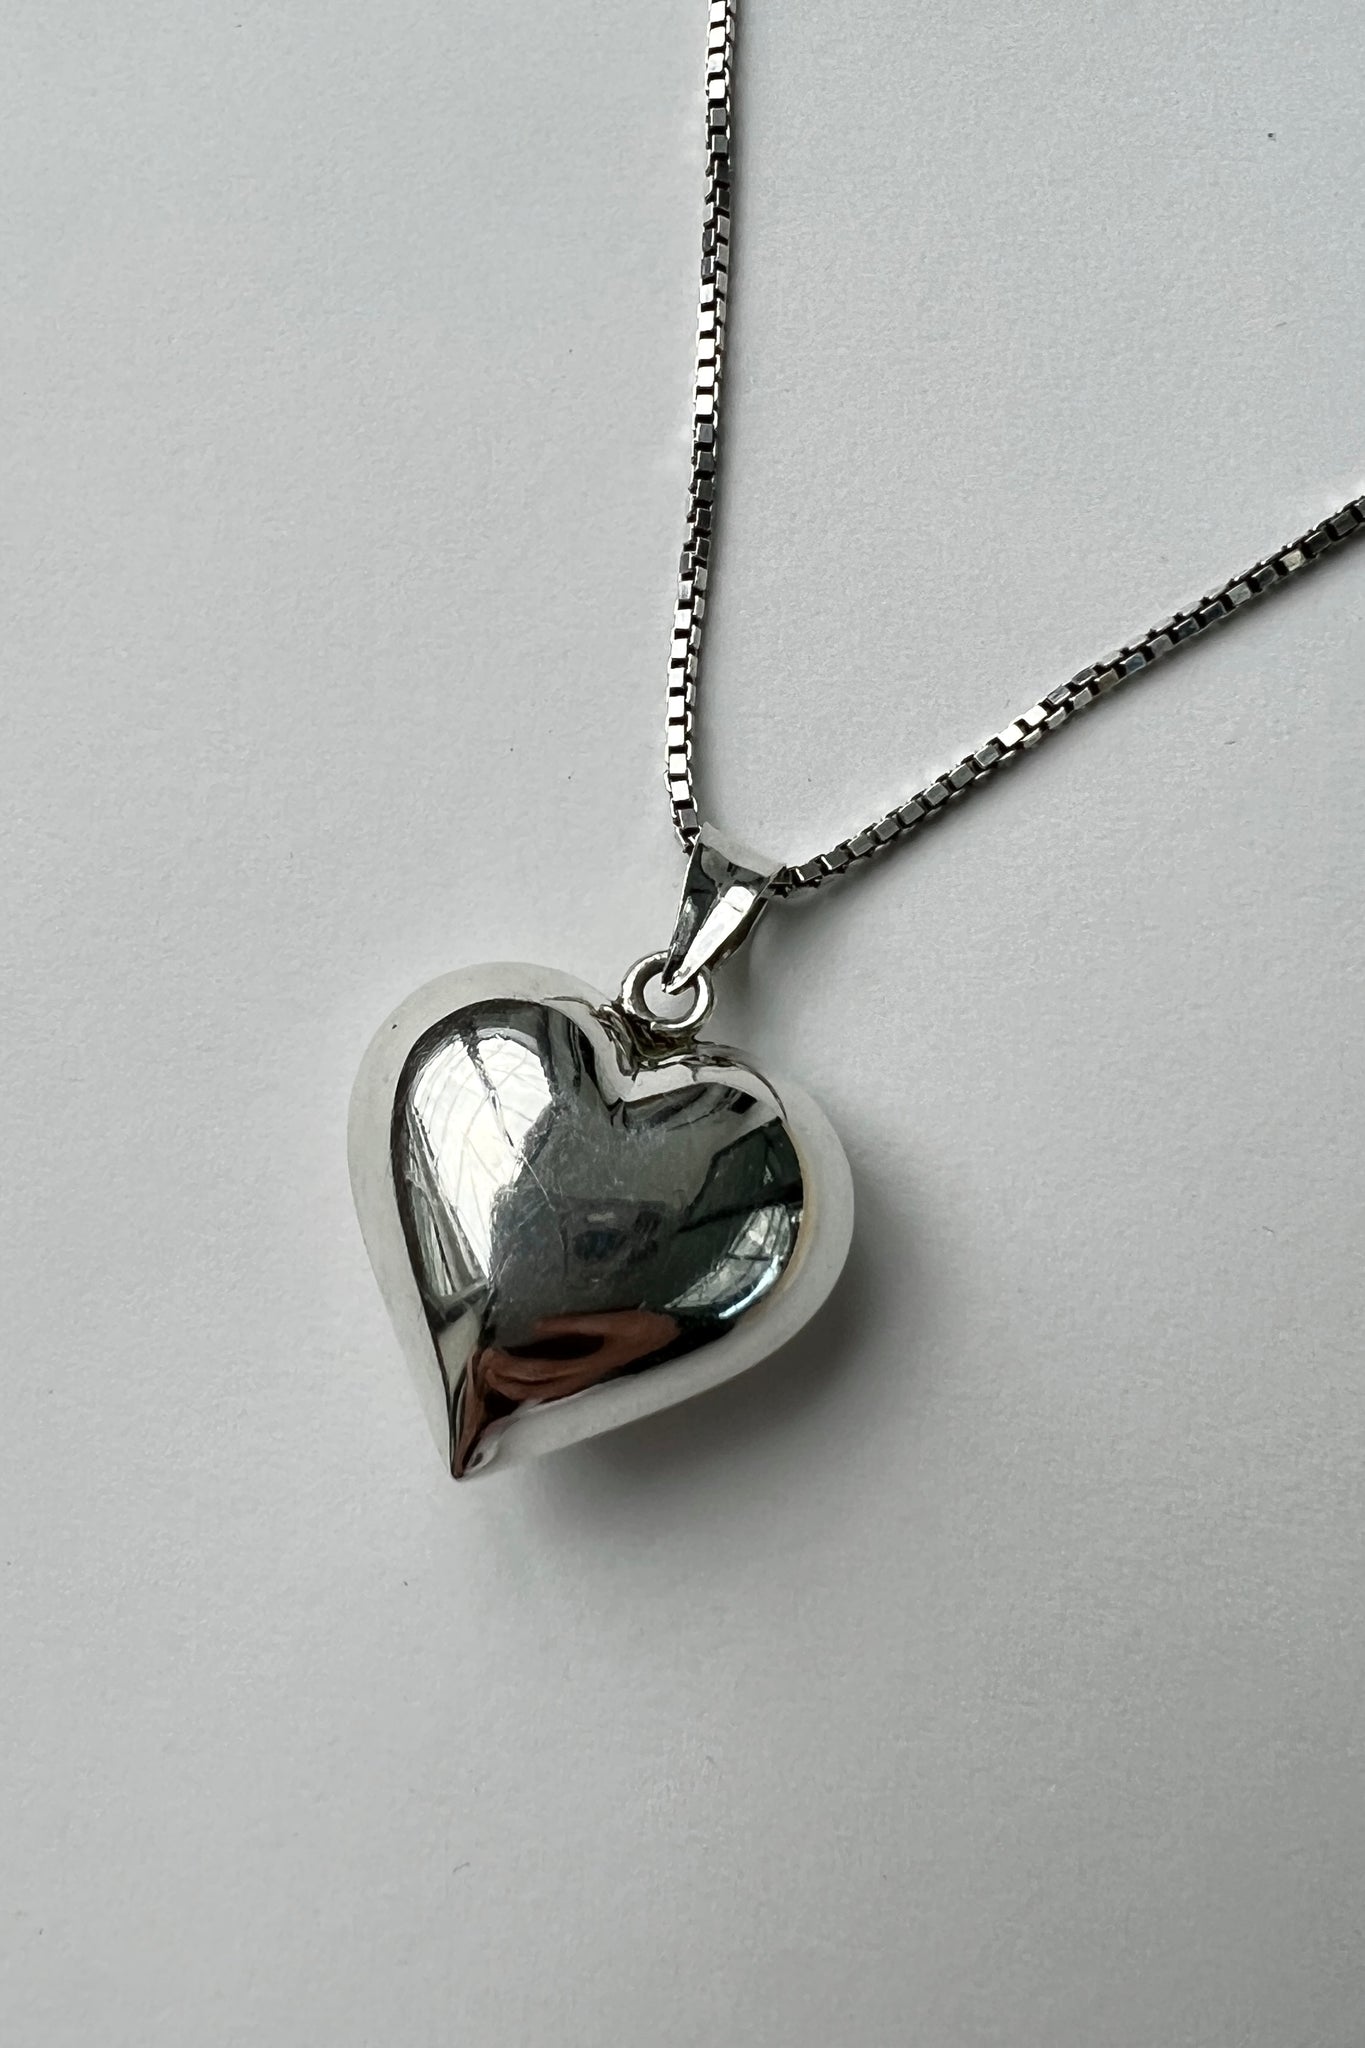 Long Silver Heart Pendant Necklace